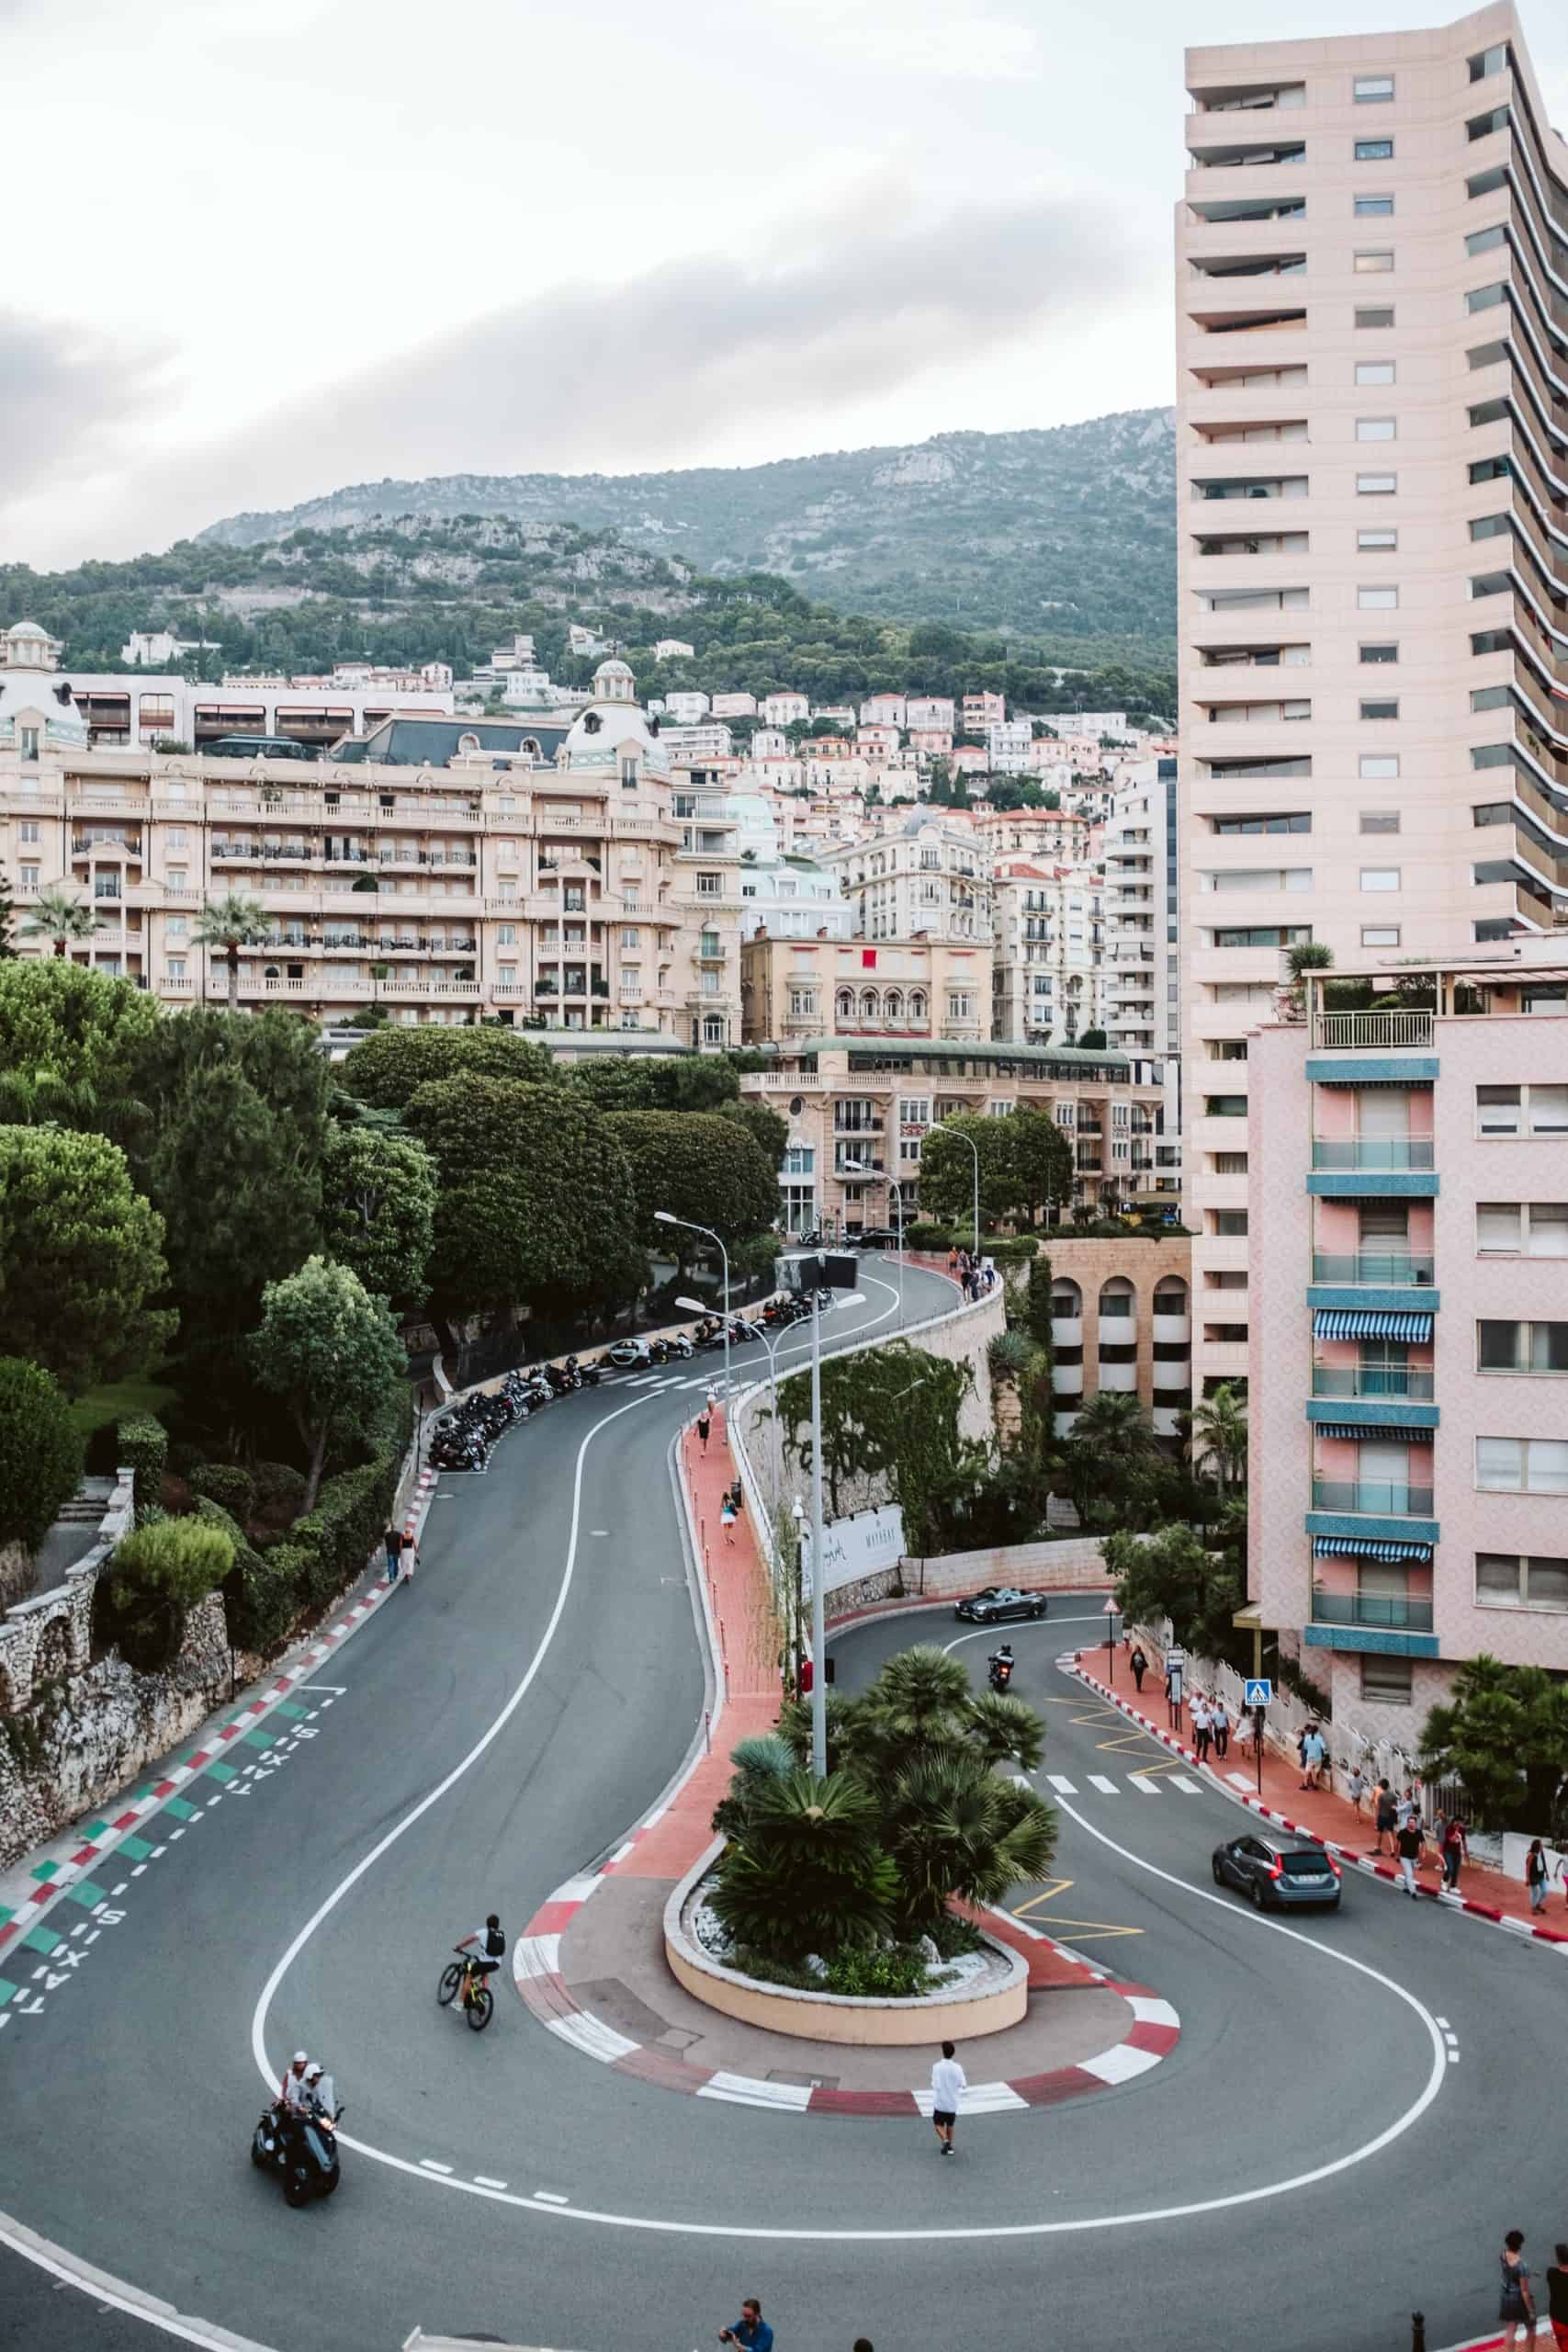 Best things to do in Monaco - AJ Saunders - Formula One in Monaco by Filipp Romanovski on Unsplash